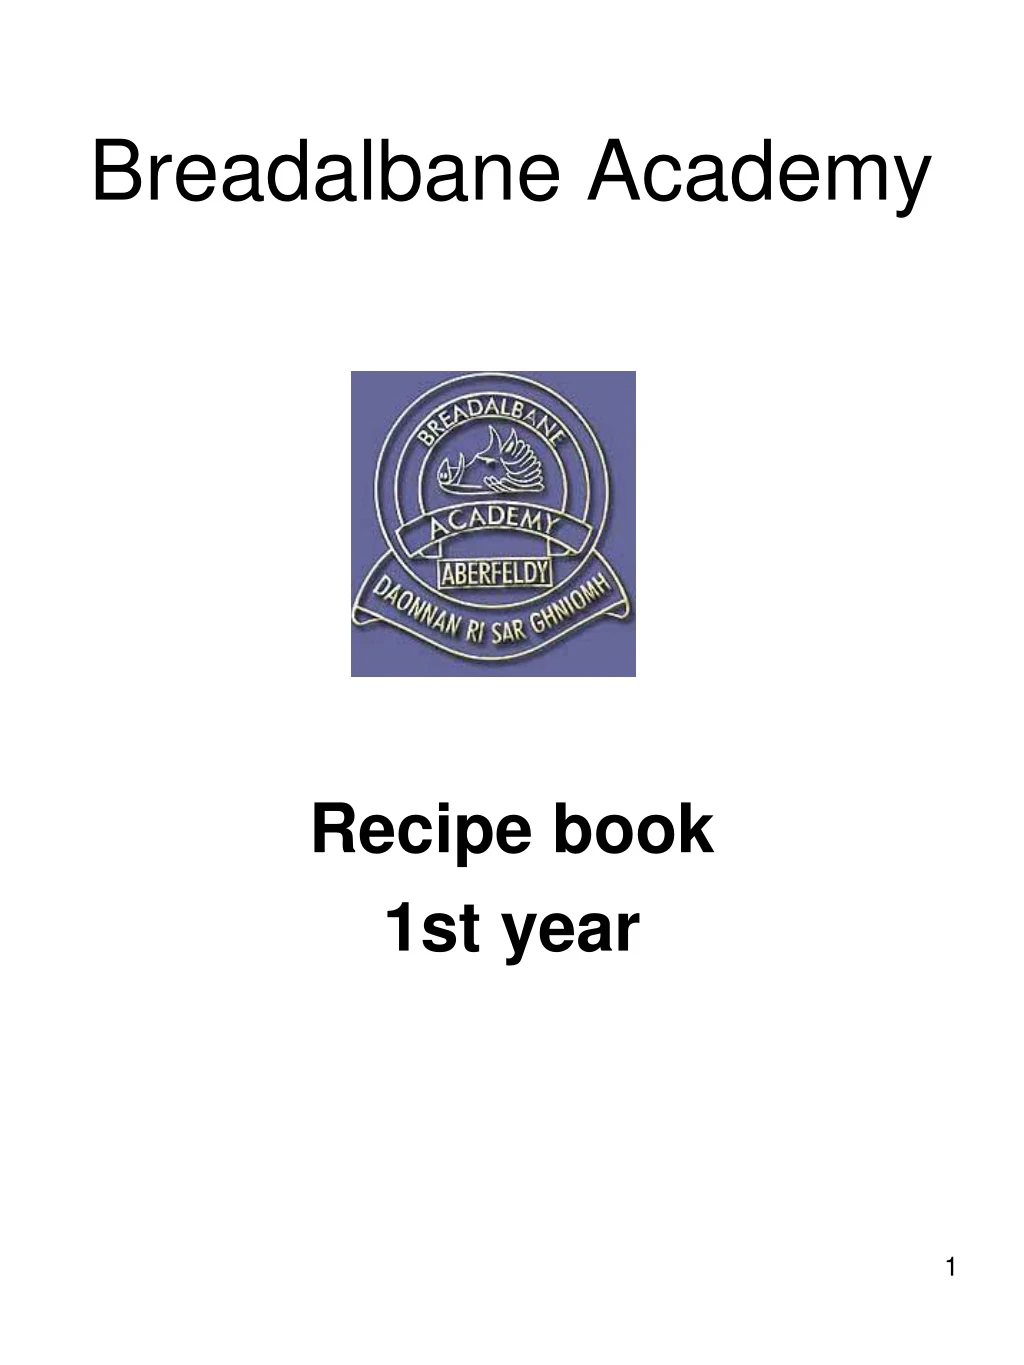 breadalbane academy